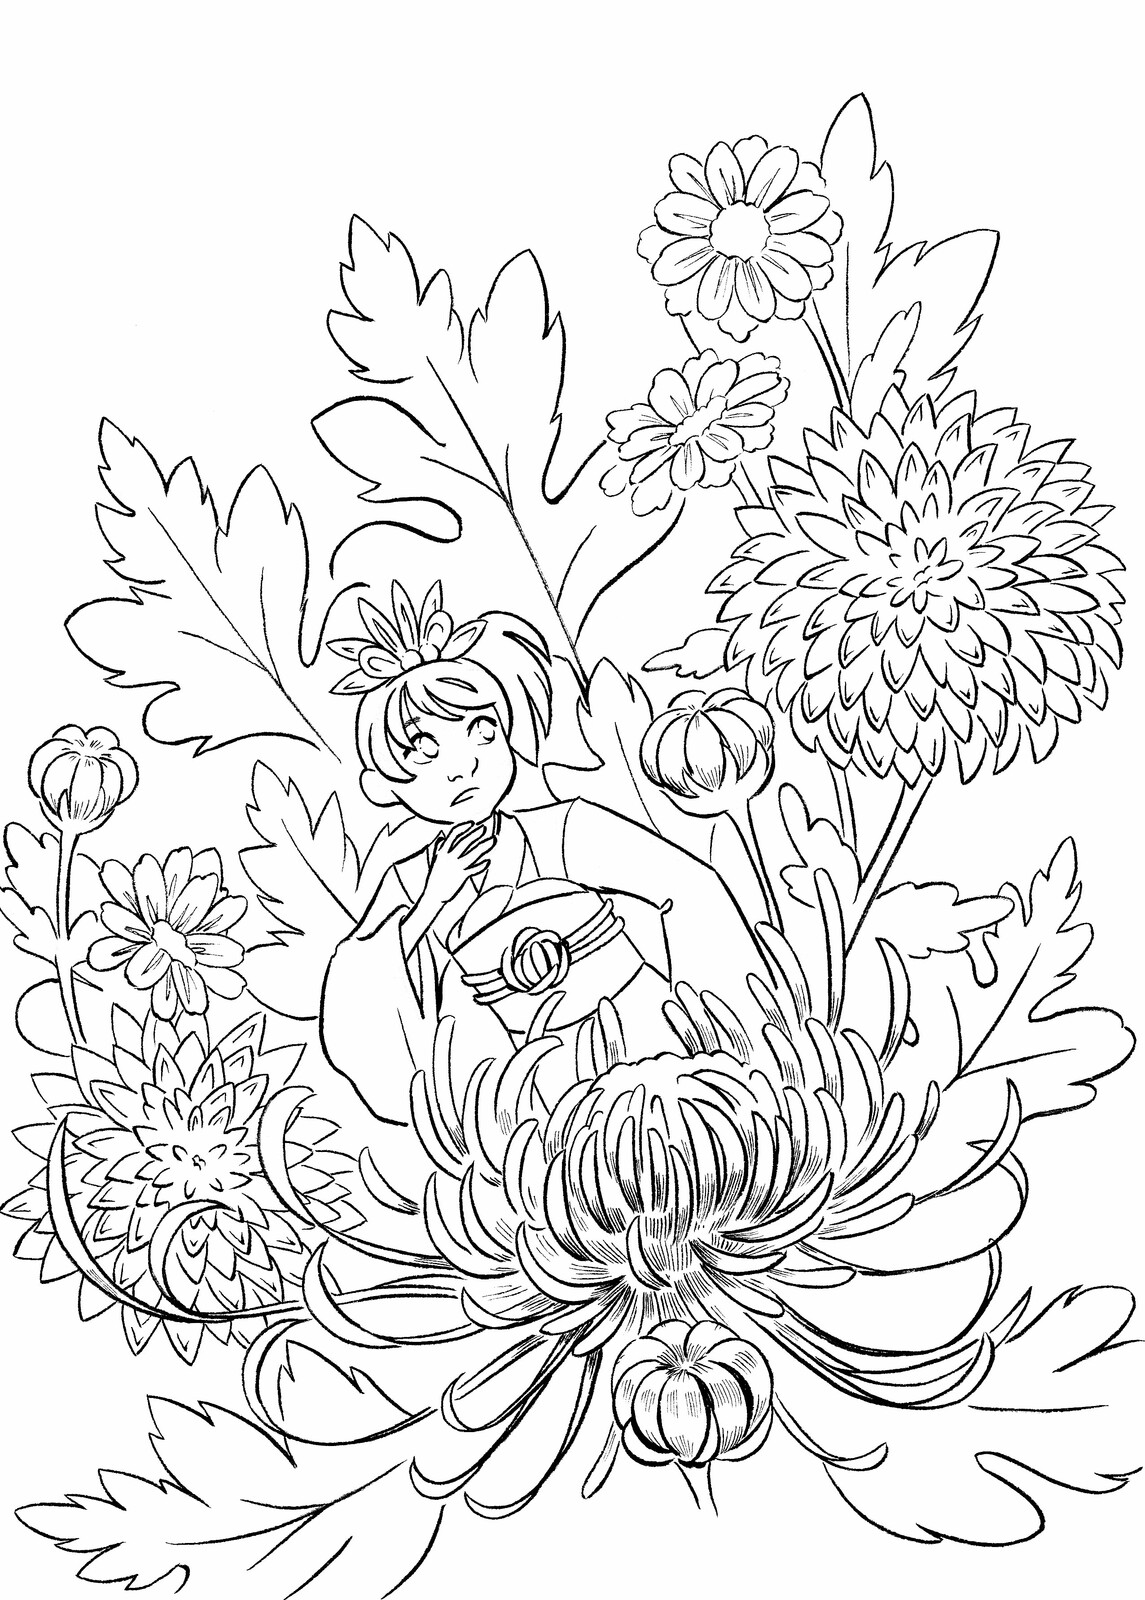 Day 26- Chrysanthemum 